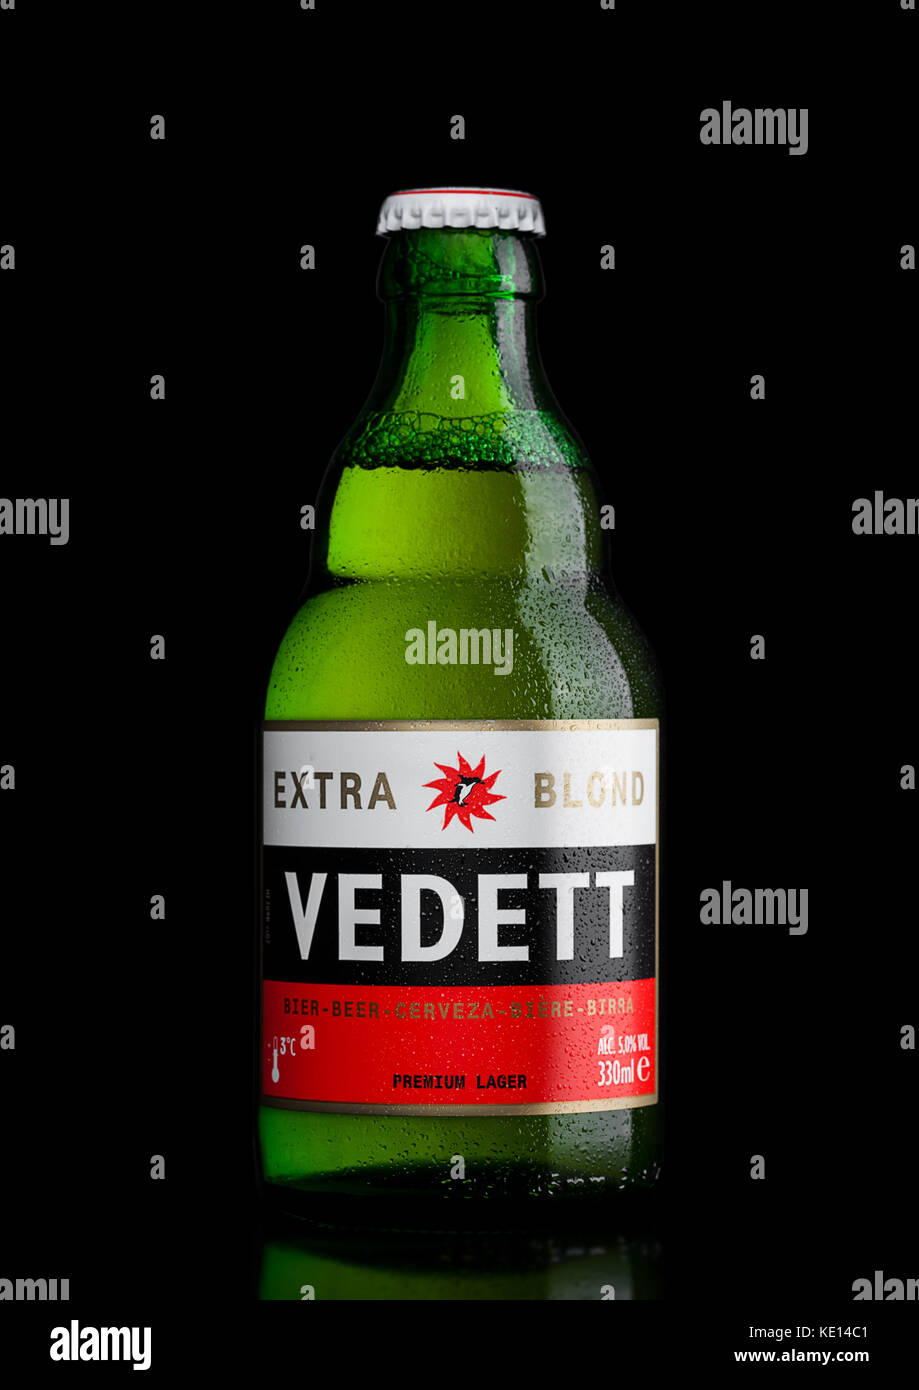 LONDON, UK - APRIL 12, 2017: Bottle of Belgian Vedett Extra White beer on a black background. Stock Photo